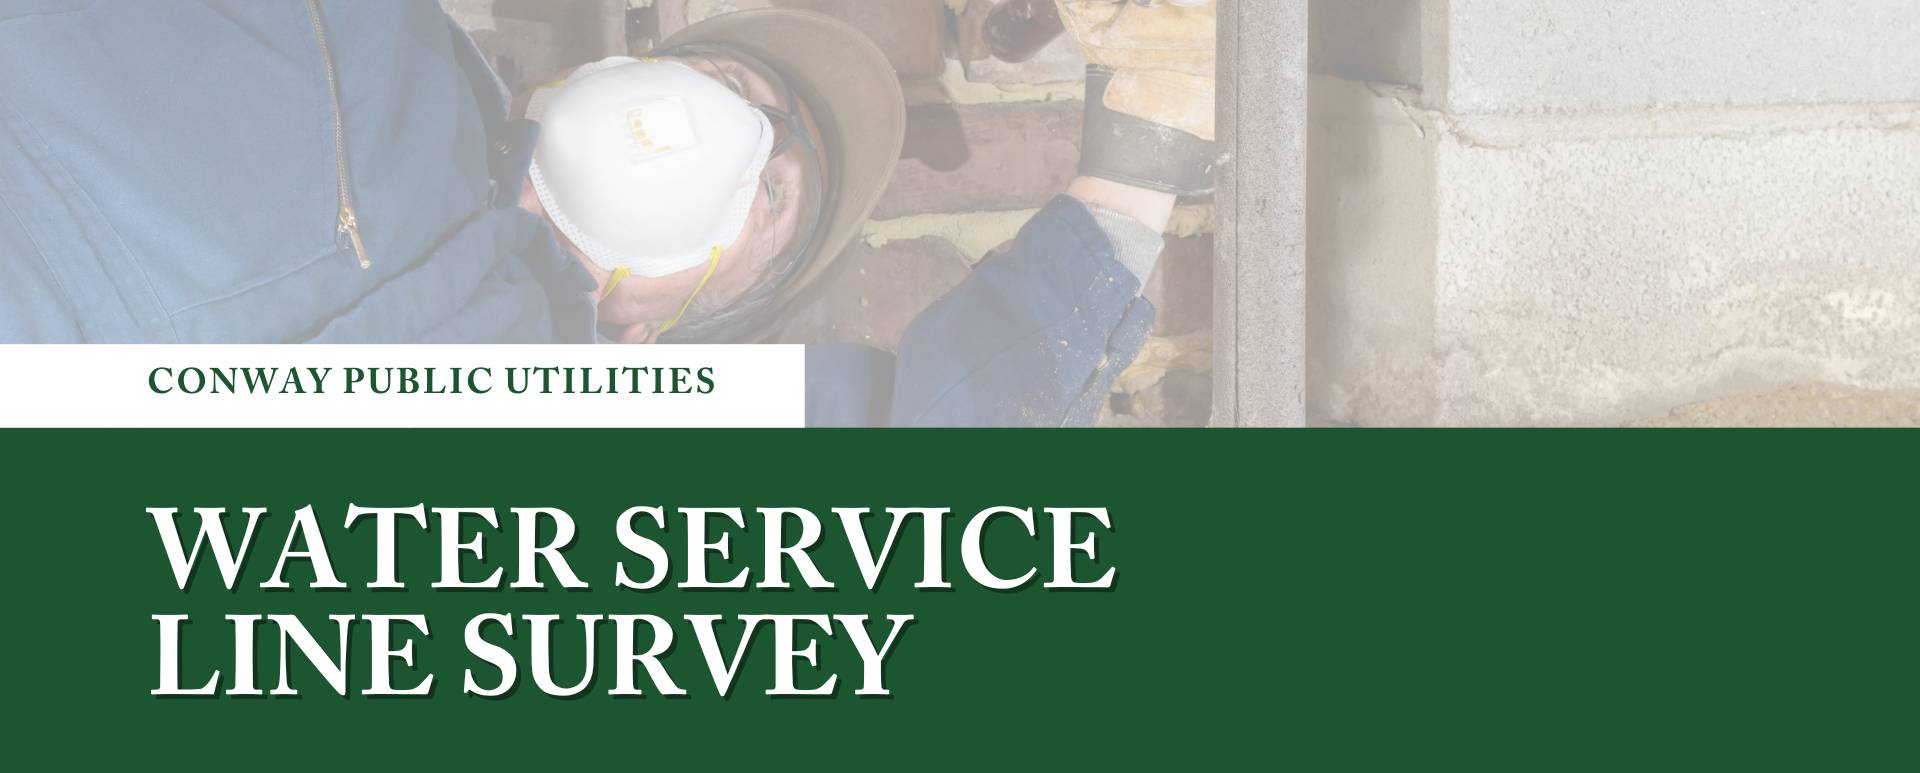 water service line survey - Copy